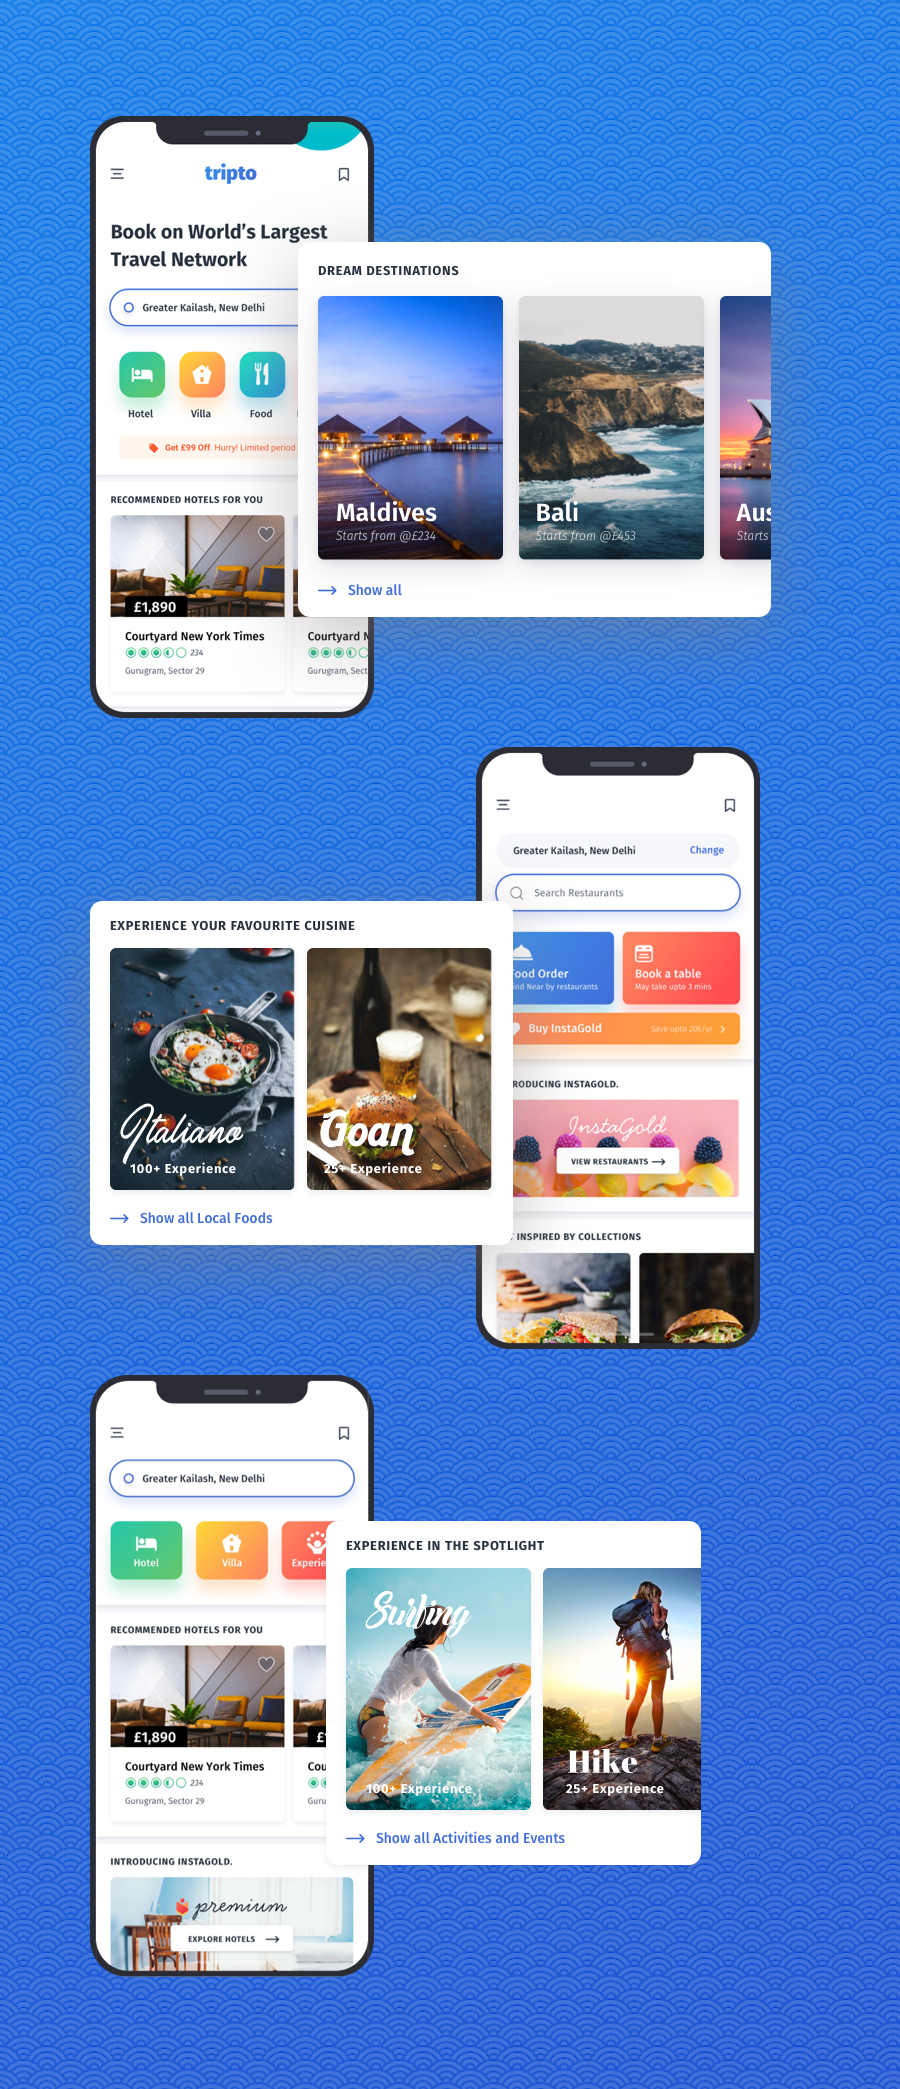 Tripto - Travel and Food Mobile App UI-kit